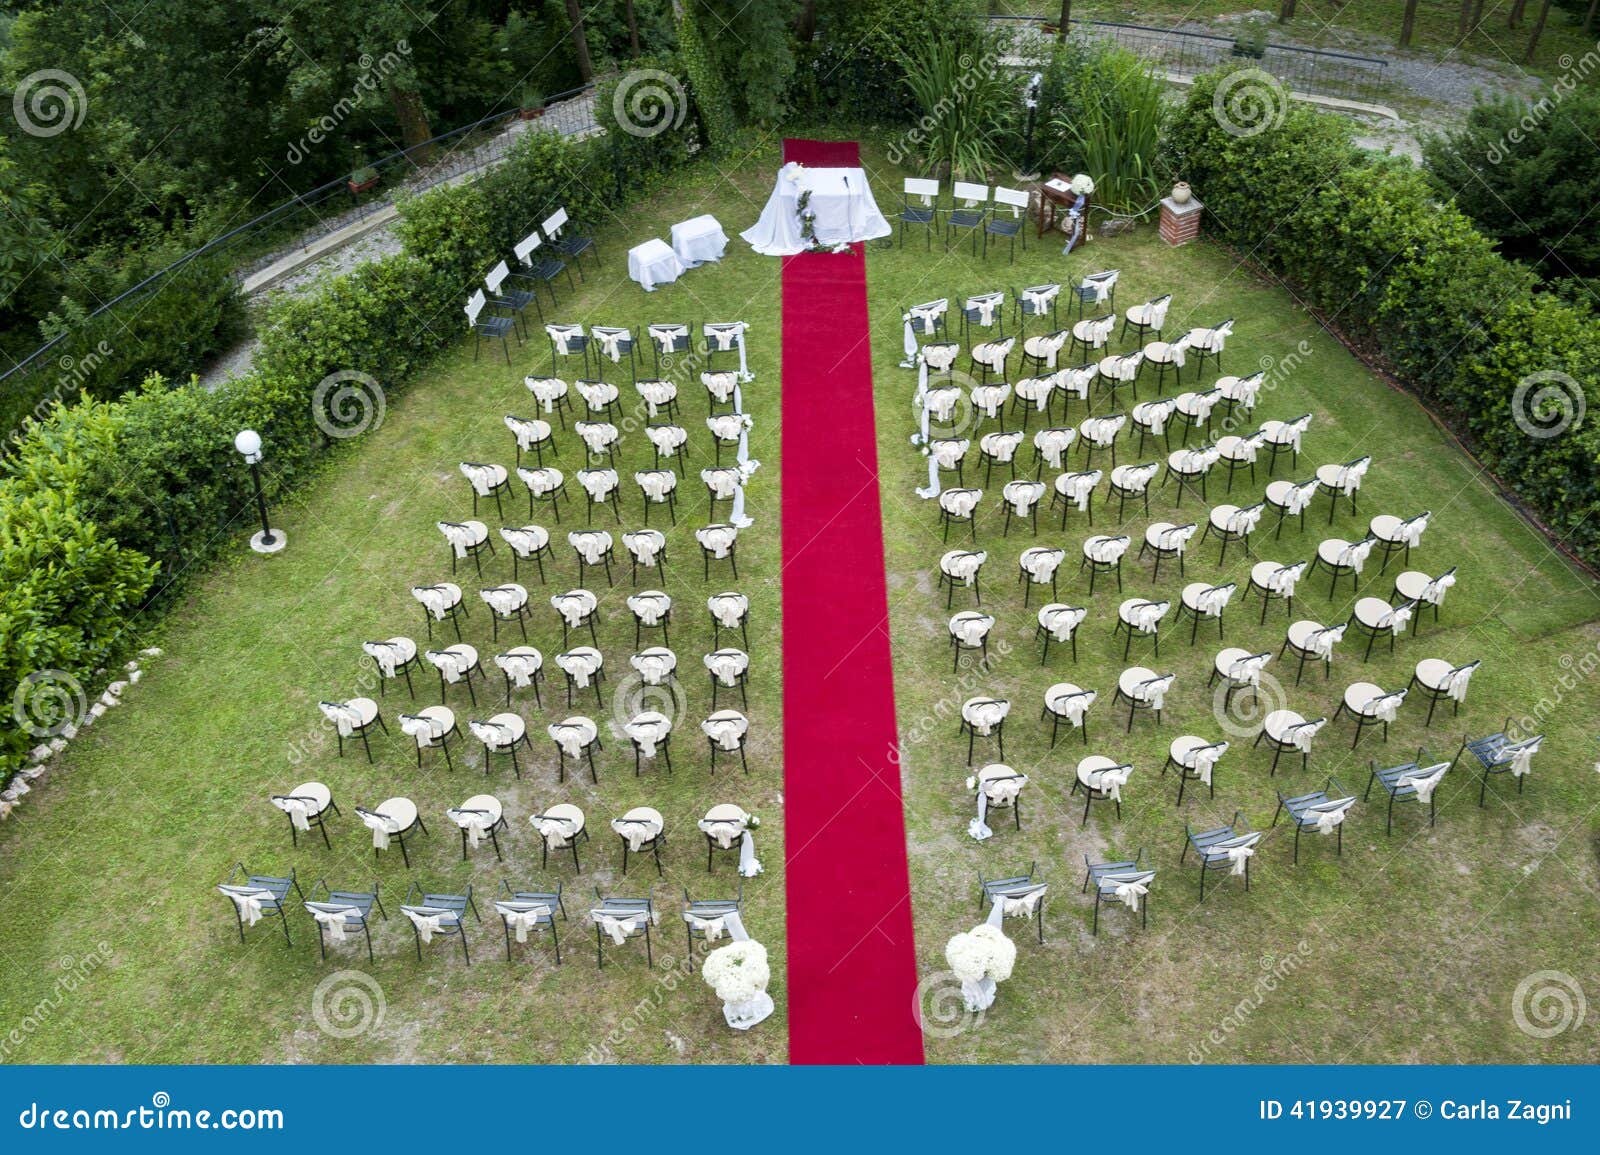 adventist outdoor wedding